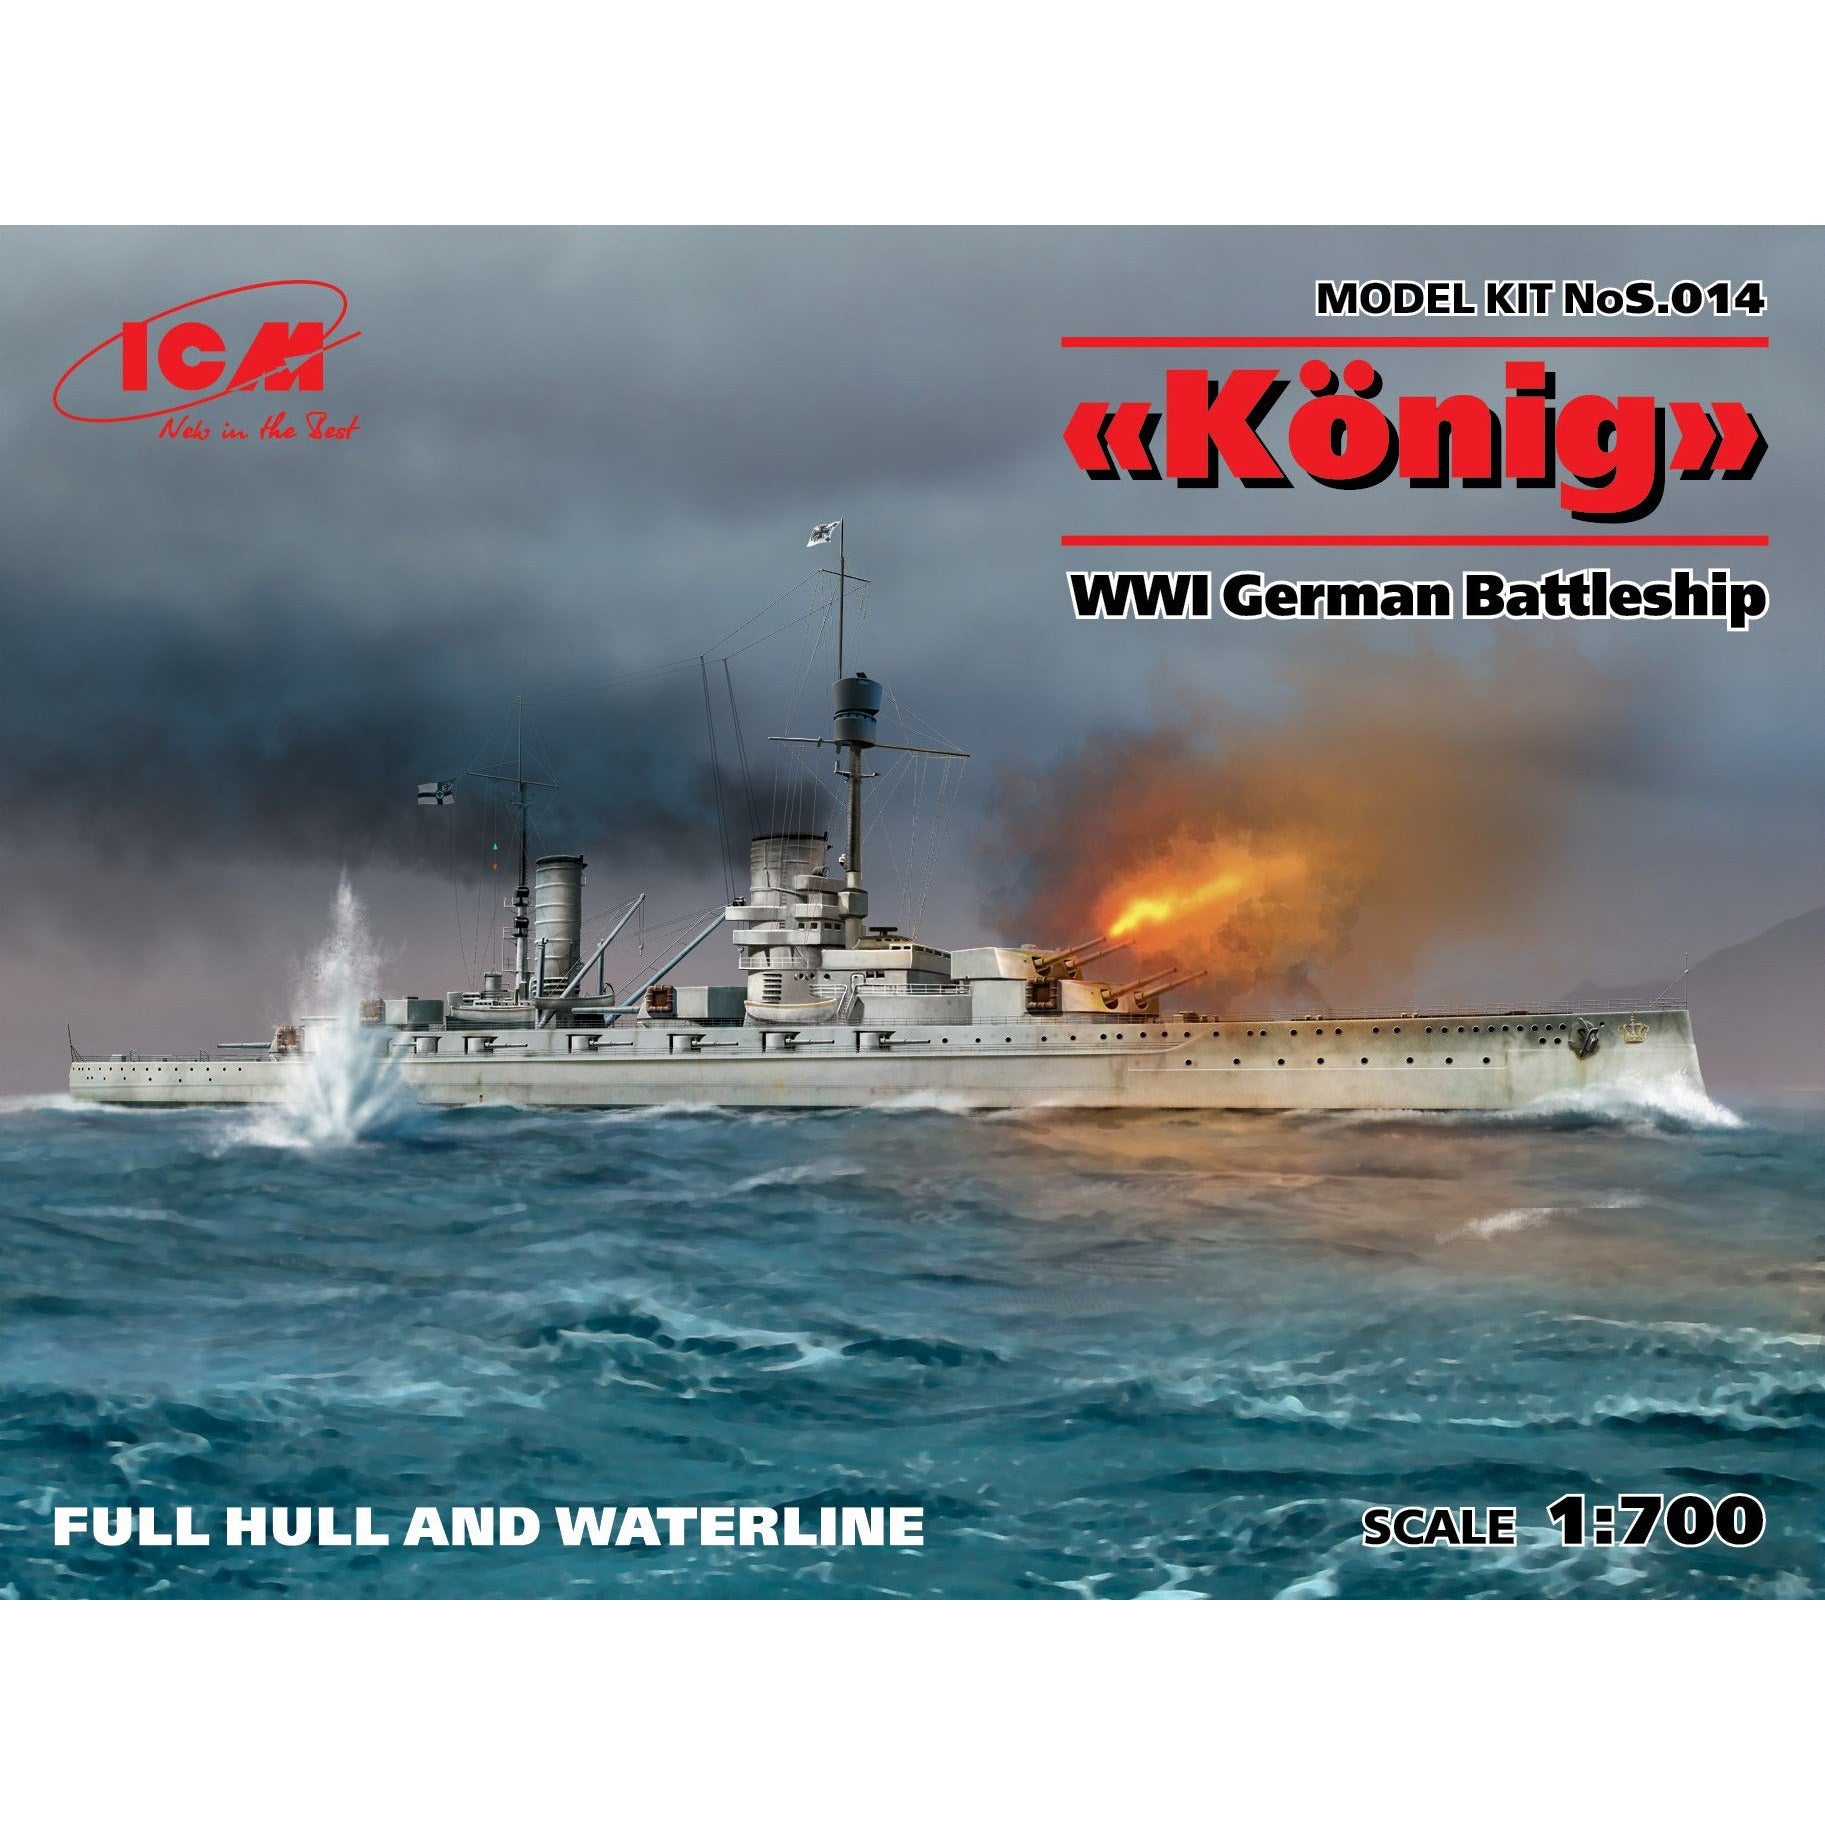 Konig WWI German Battleship 1/700 w/ Full Hull and Waterline Model Ship Kit #S014 by ICM